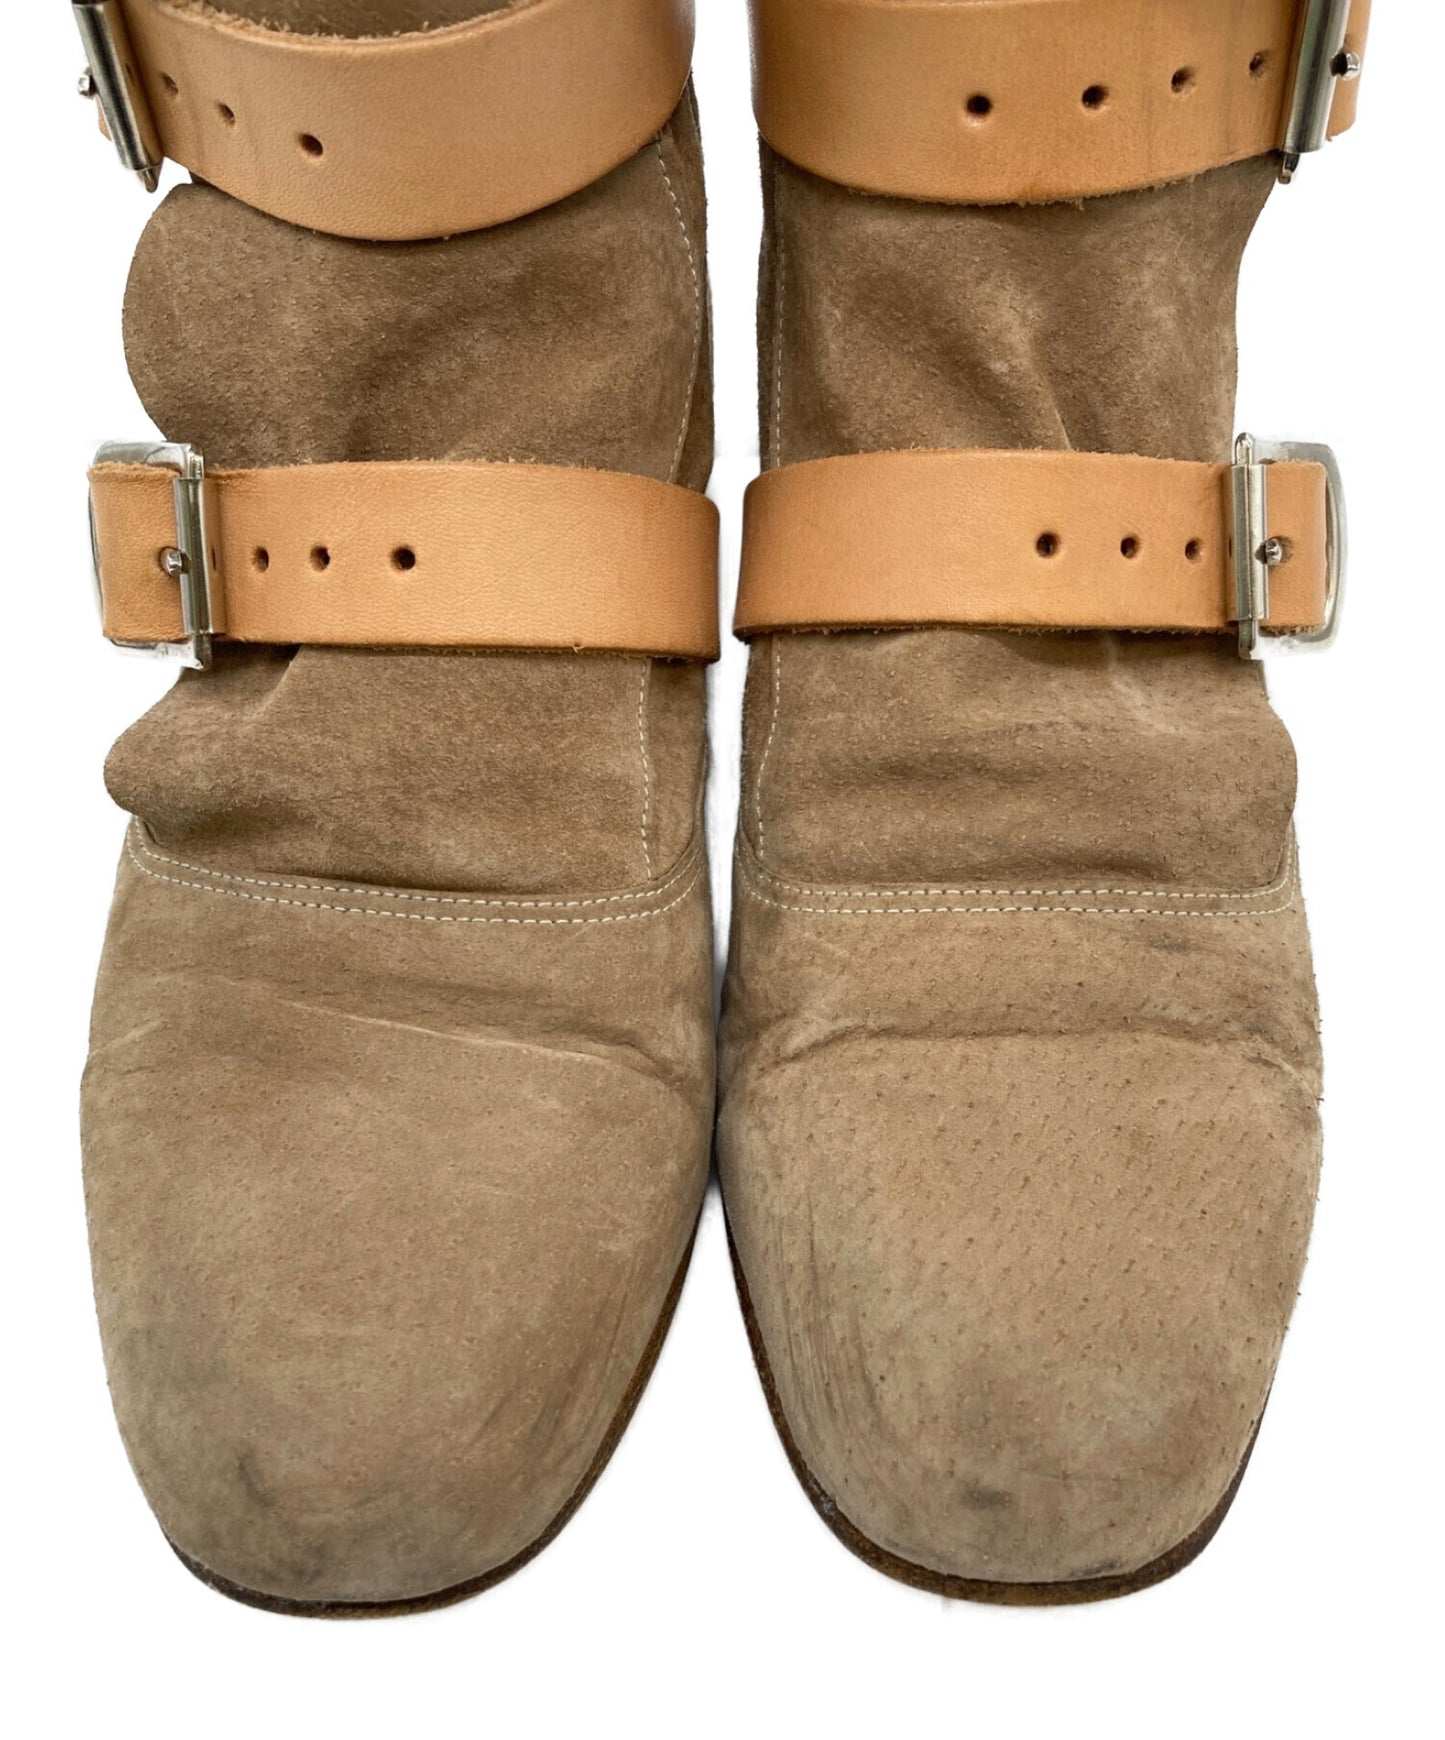 Vivienne Westwood海盗靴子 /长靴 /靴子